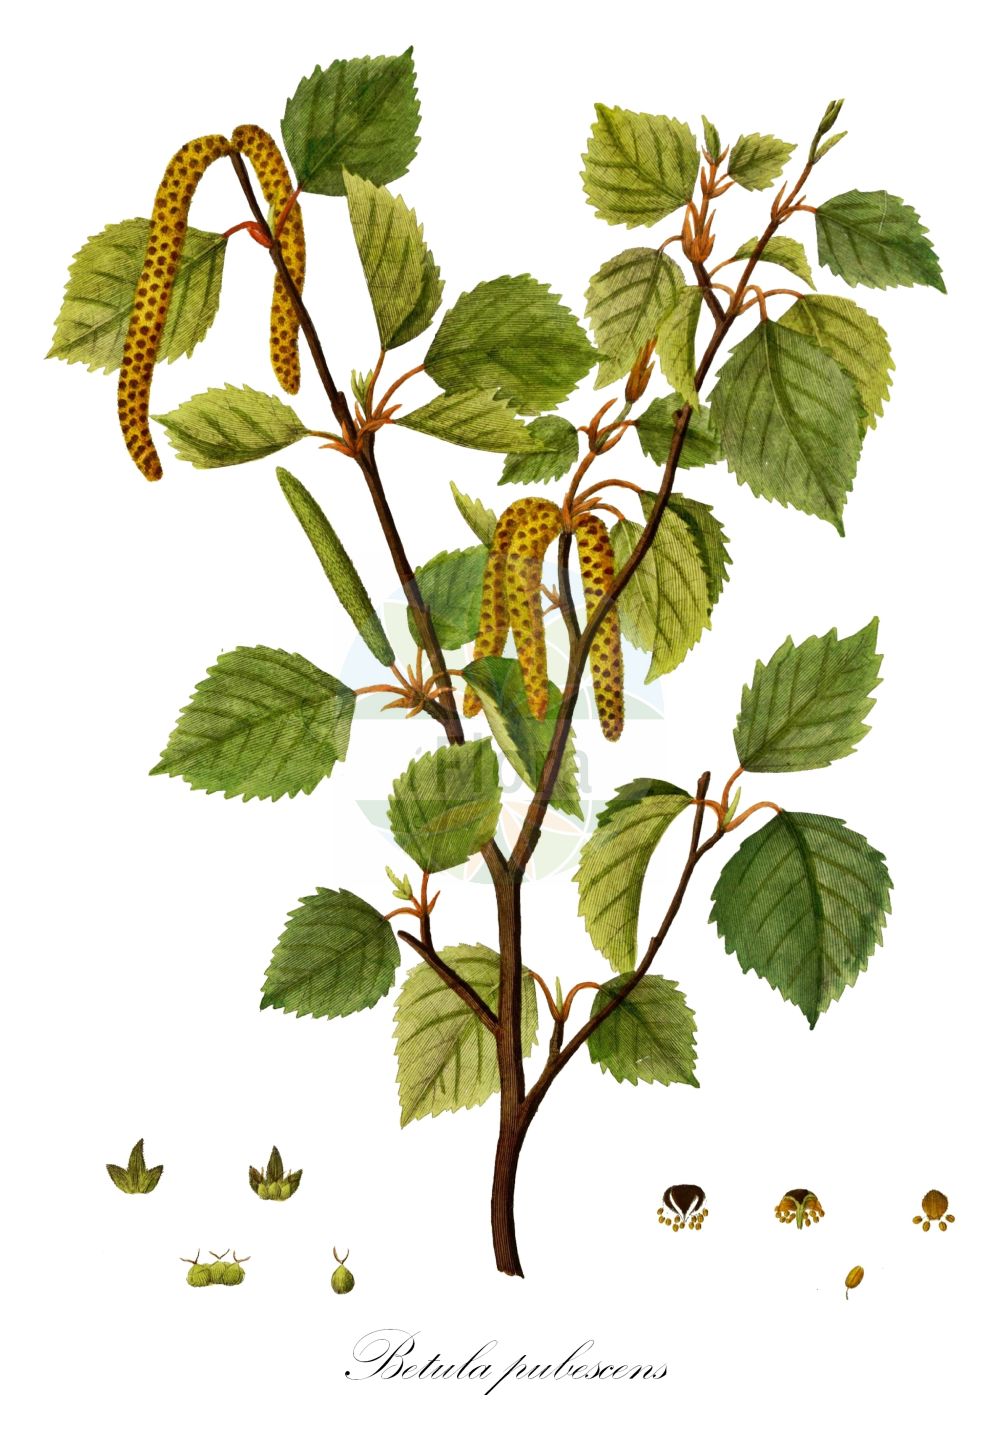 Historische Abbildung von Betula pubescens (Moor-Birke - Downy Birch). ---- Historical Drawing of Betula pubescens (Moor-Birke - Downy Birch).(Betula pubescens,Moor-Birke,Downy Birch,Betula pubescens,Betula pubescens var. typica,Moor-Birke,Behaarte Birke,Besen-Birke,Gewoehnliche Moor-Birke,Downy Birch,Pubescent Birch,Swamp Birch,White Birch,Betula,Birke,Birch,Betulaceae,Birkengewächse,Birch family,Oeder (1761-1883))